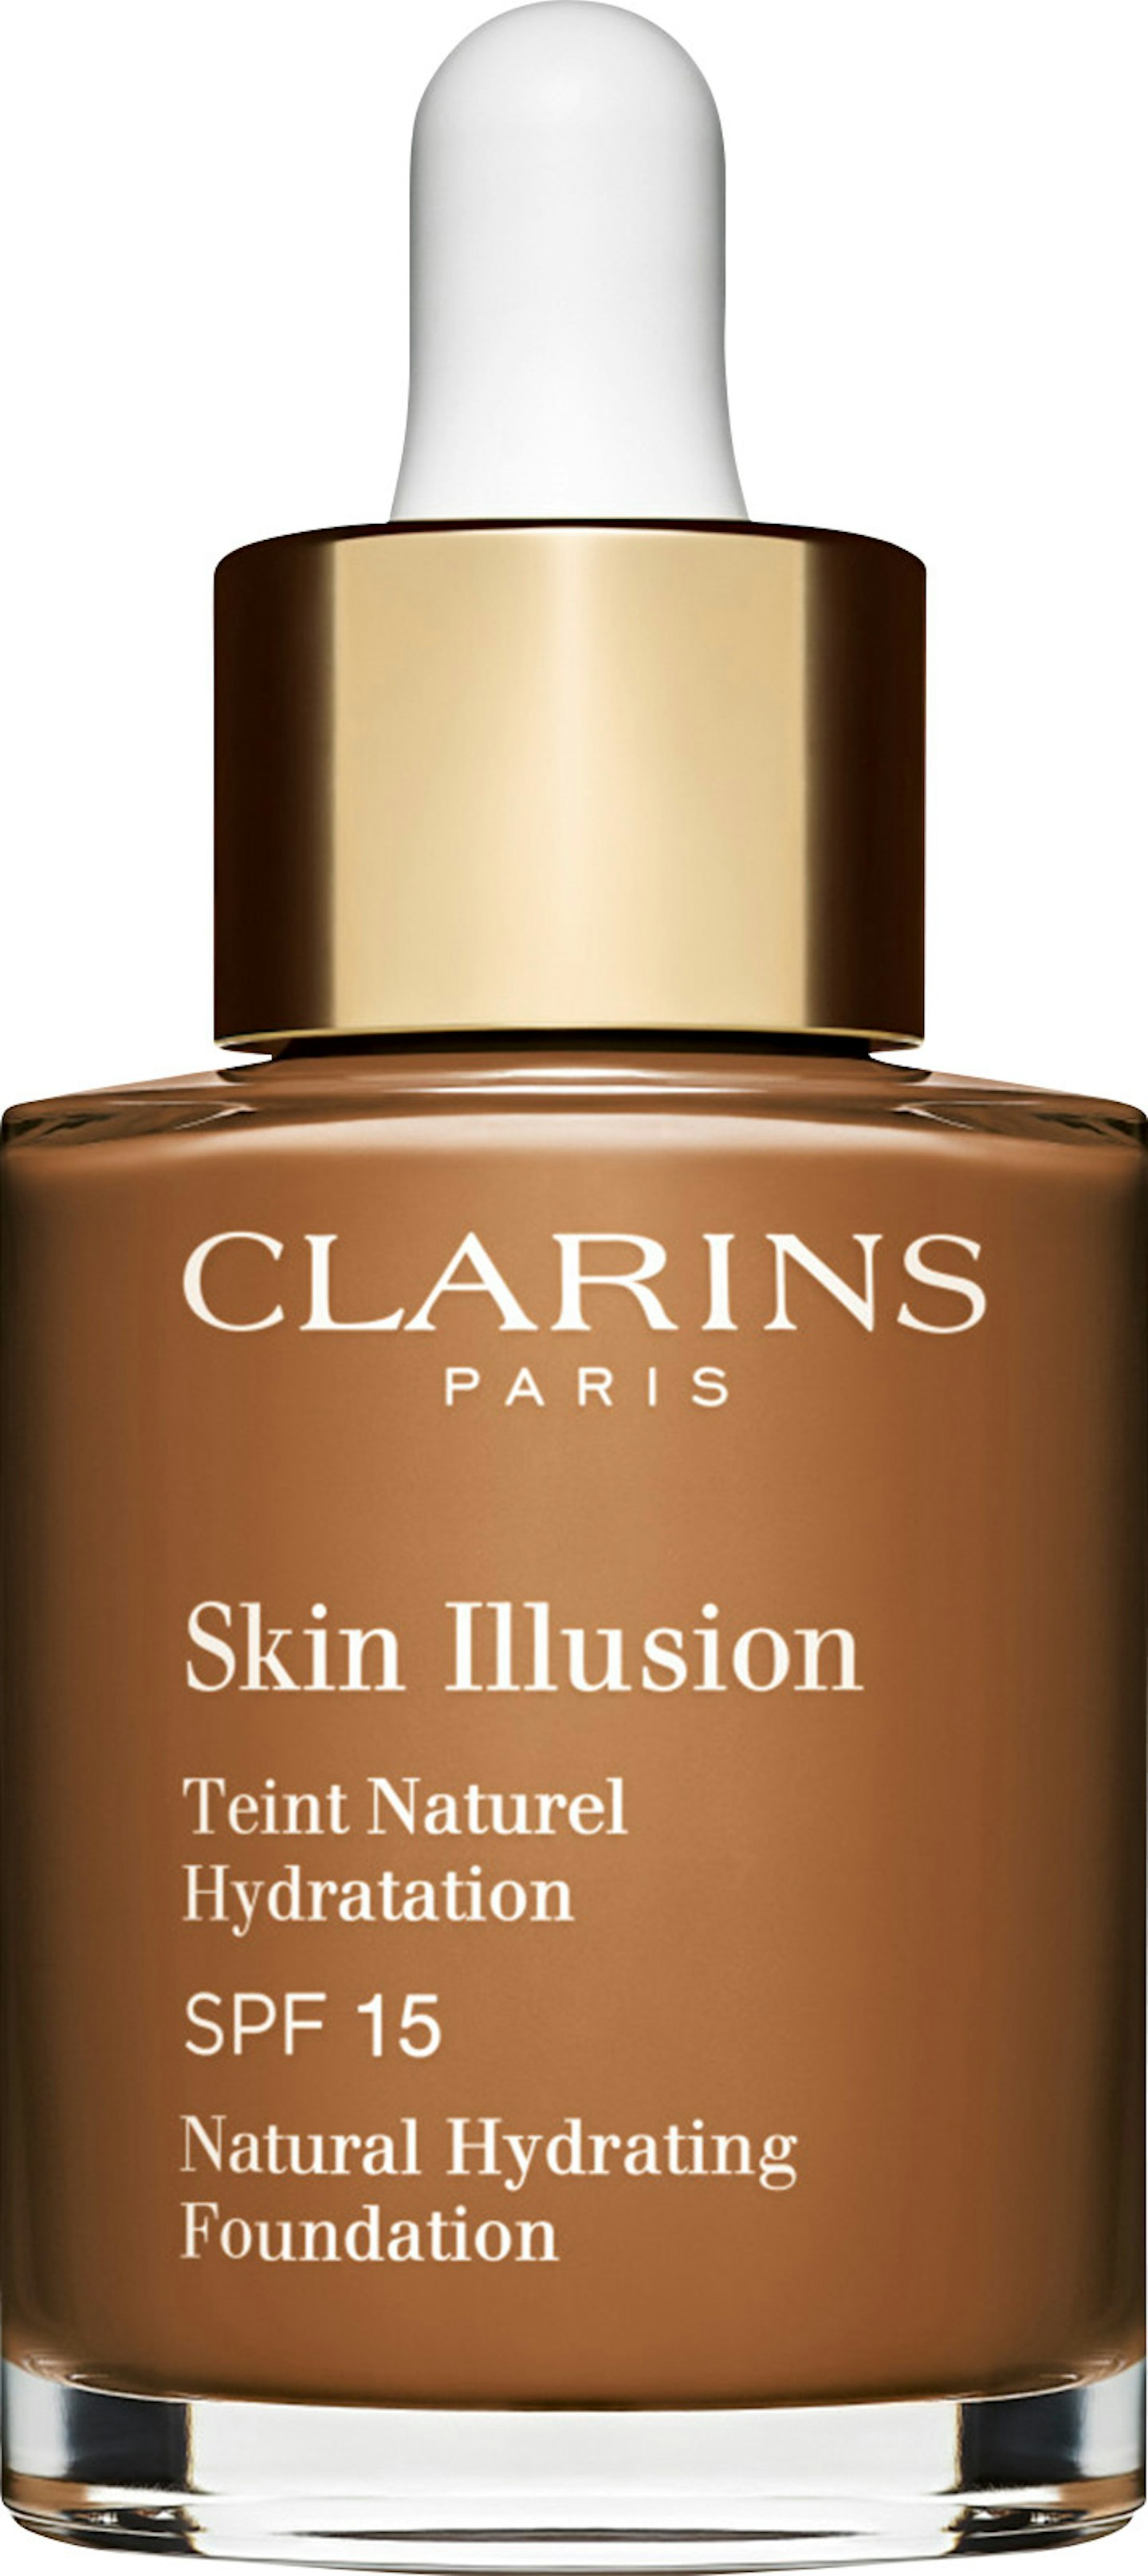 Clarins Skin Illusion Foundation SPF 15, £30